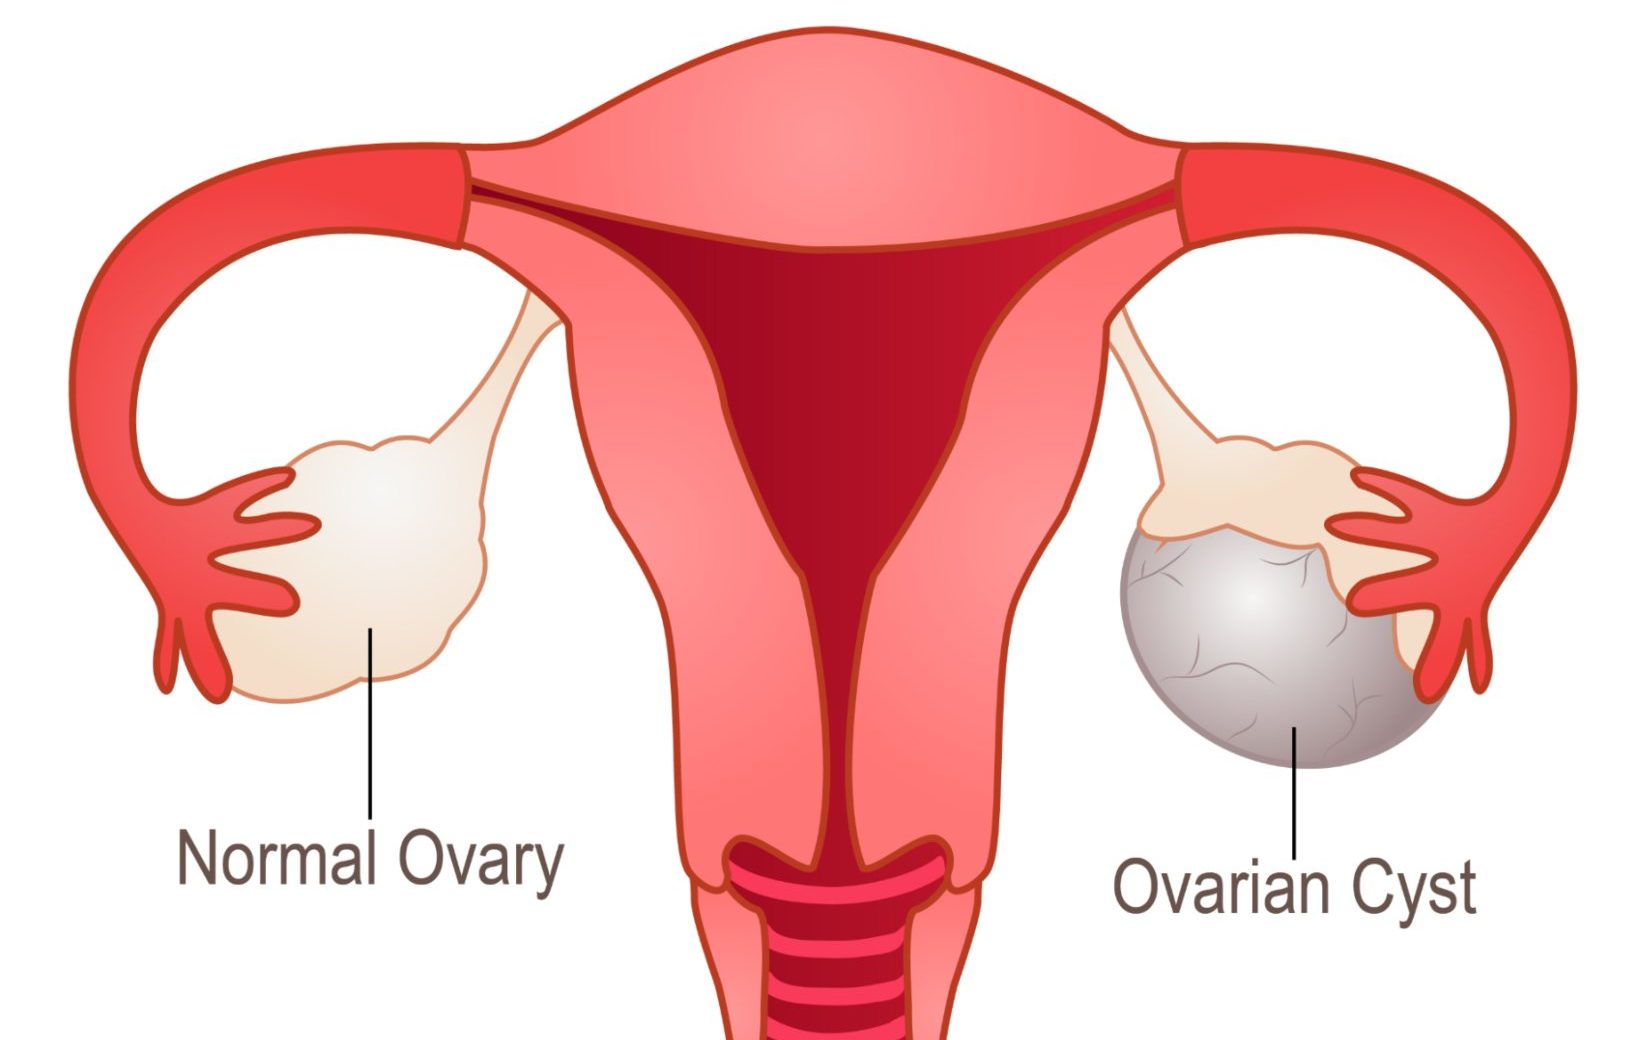 Ovarian cyst symptoms